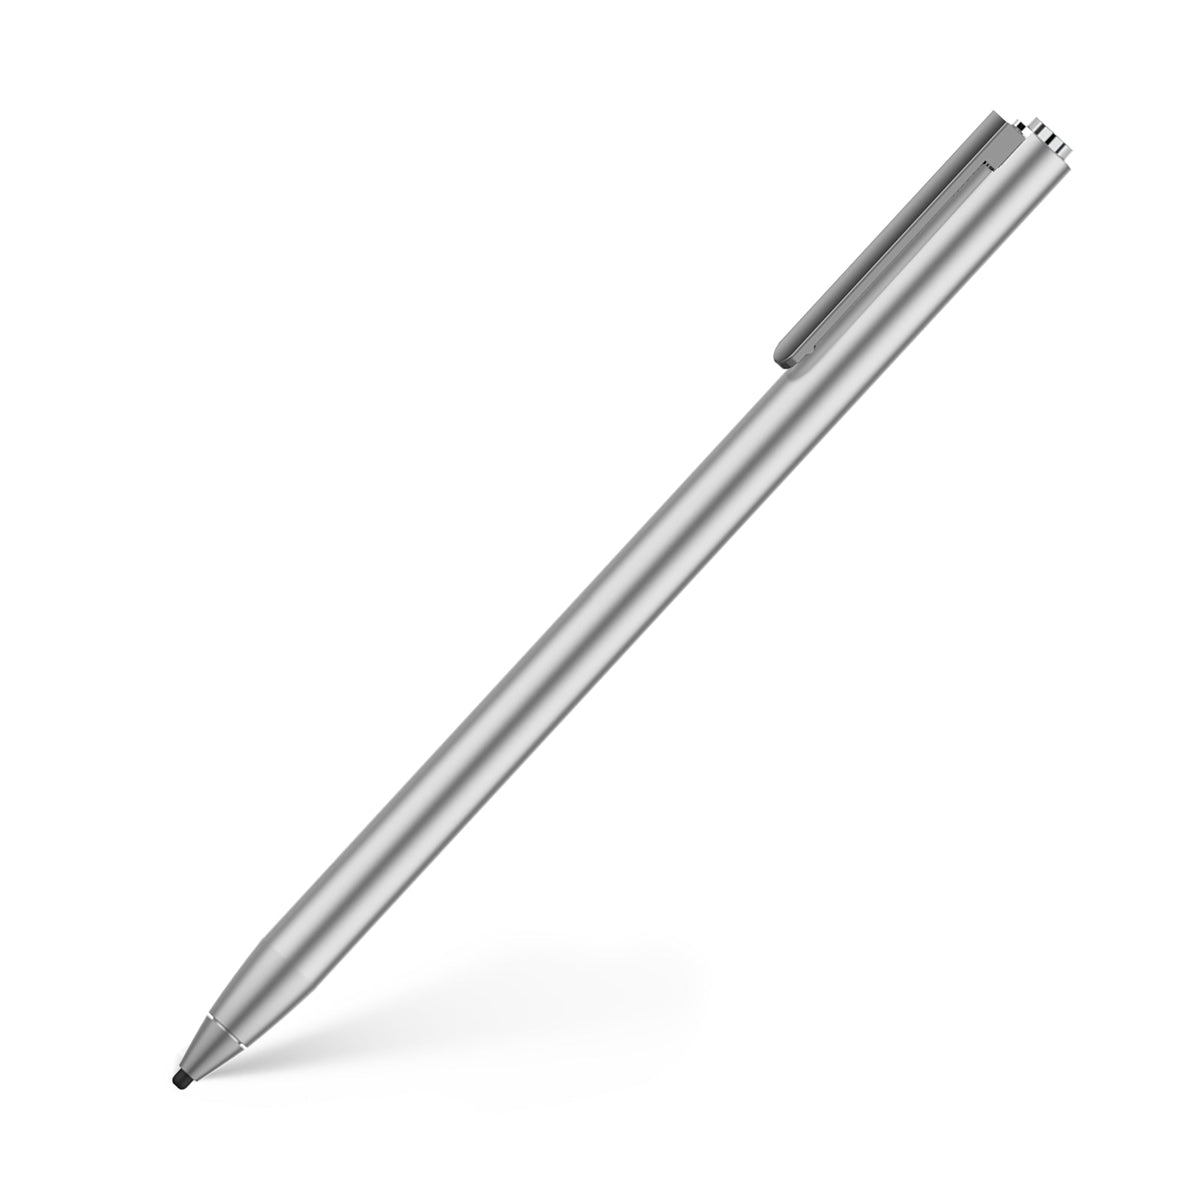 [OPEN BOX] ADONIT Dash 4 True Universal Dual Stylus, Palm Rejection Pencil - Silver